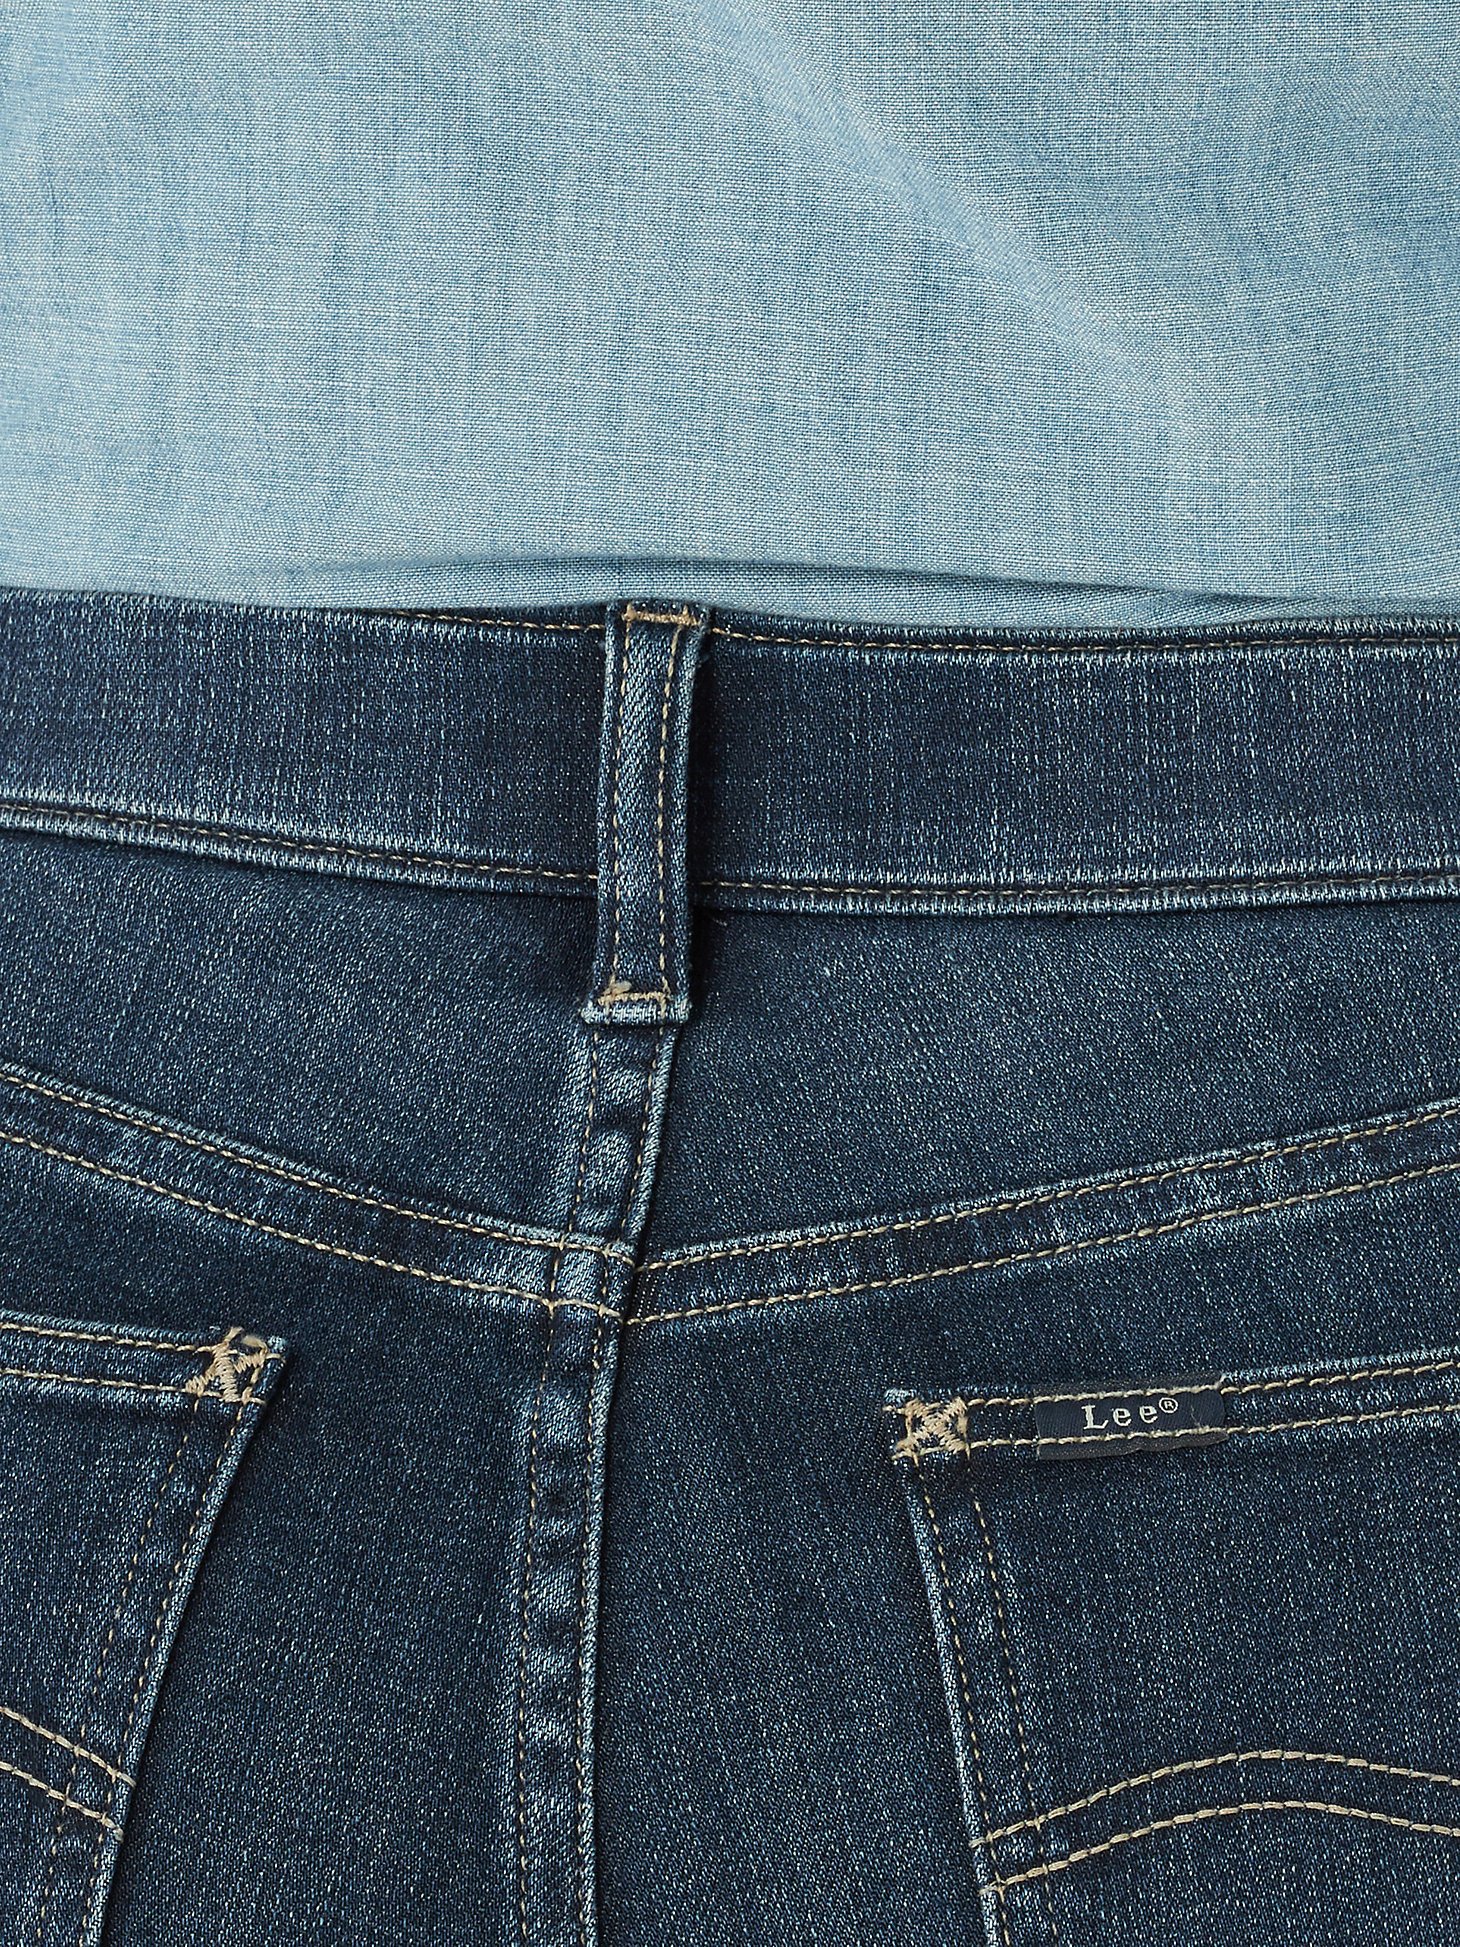 Women's Ultra Lux Comfort Slim Straight Jean (Petite) in Celestial alternative view 5